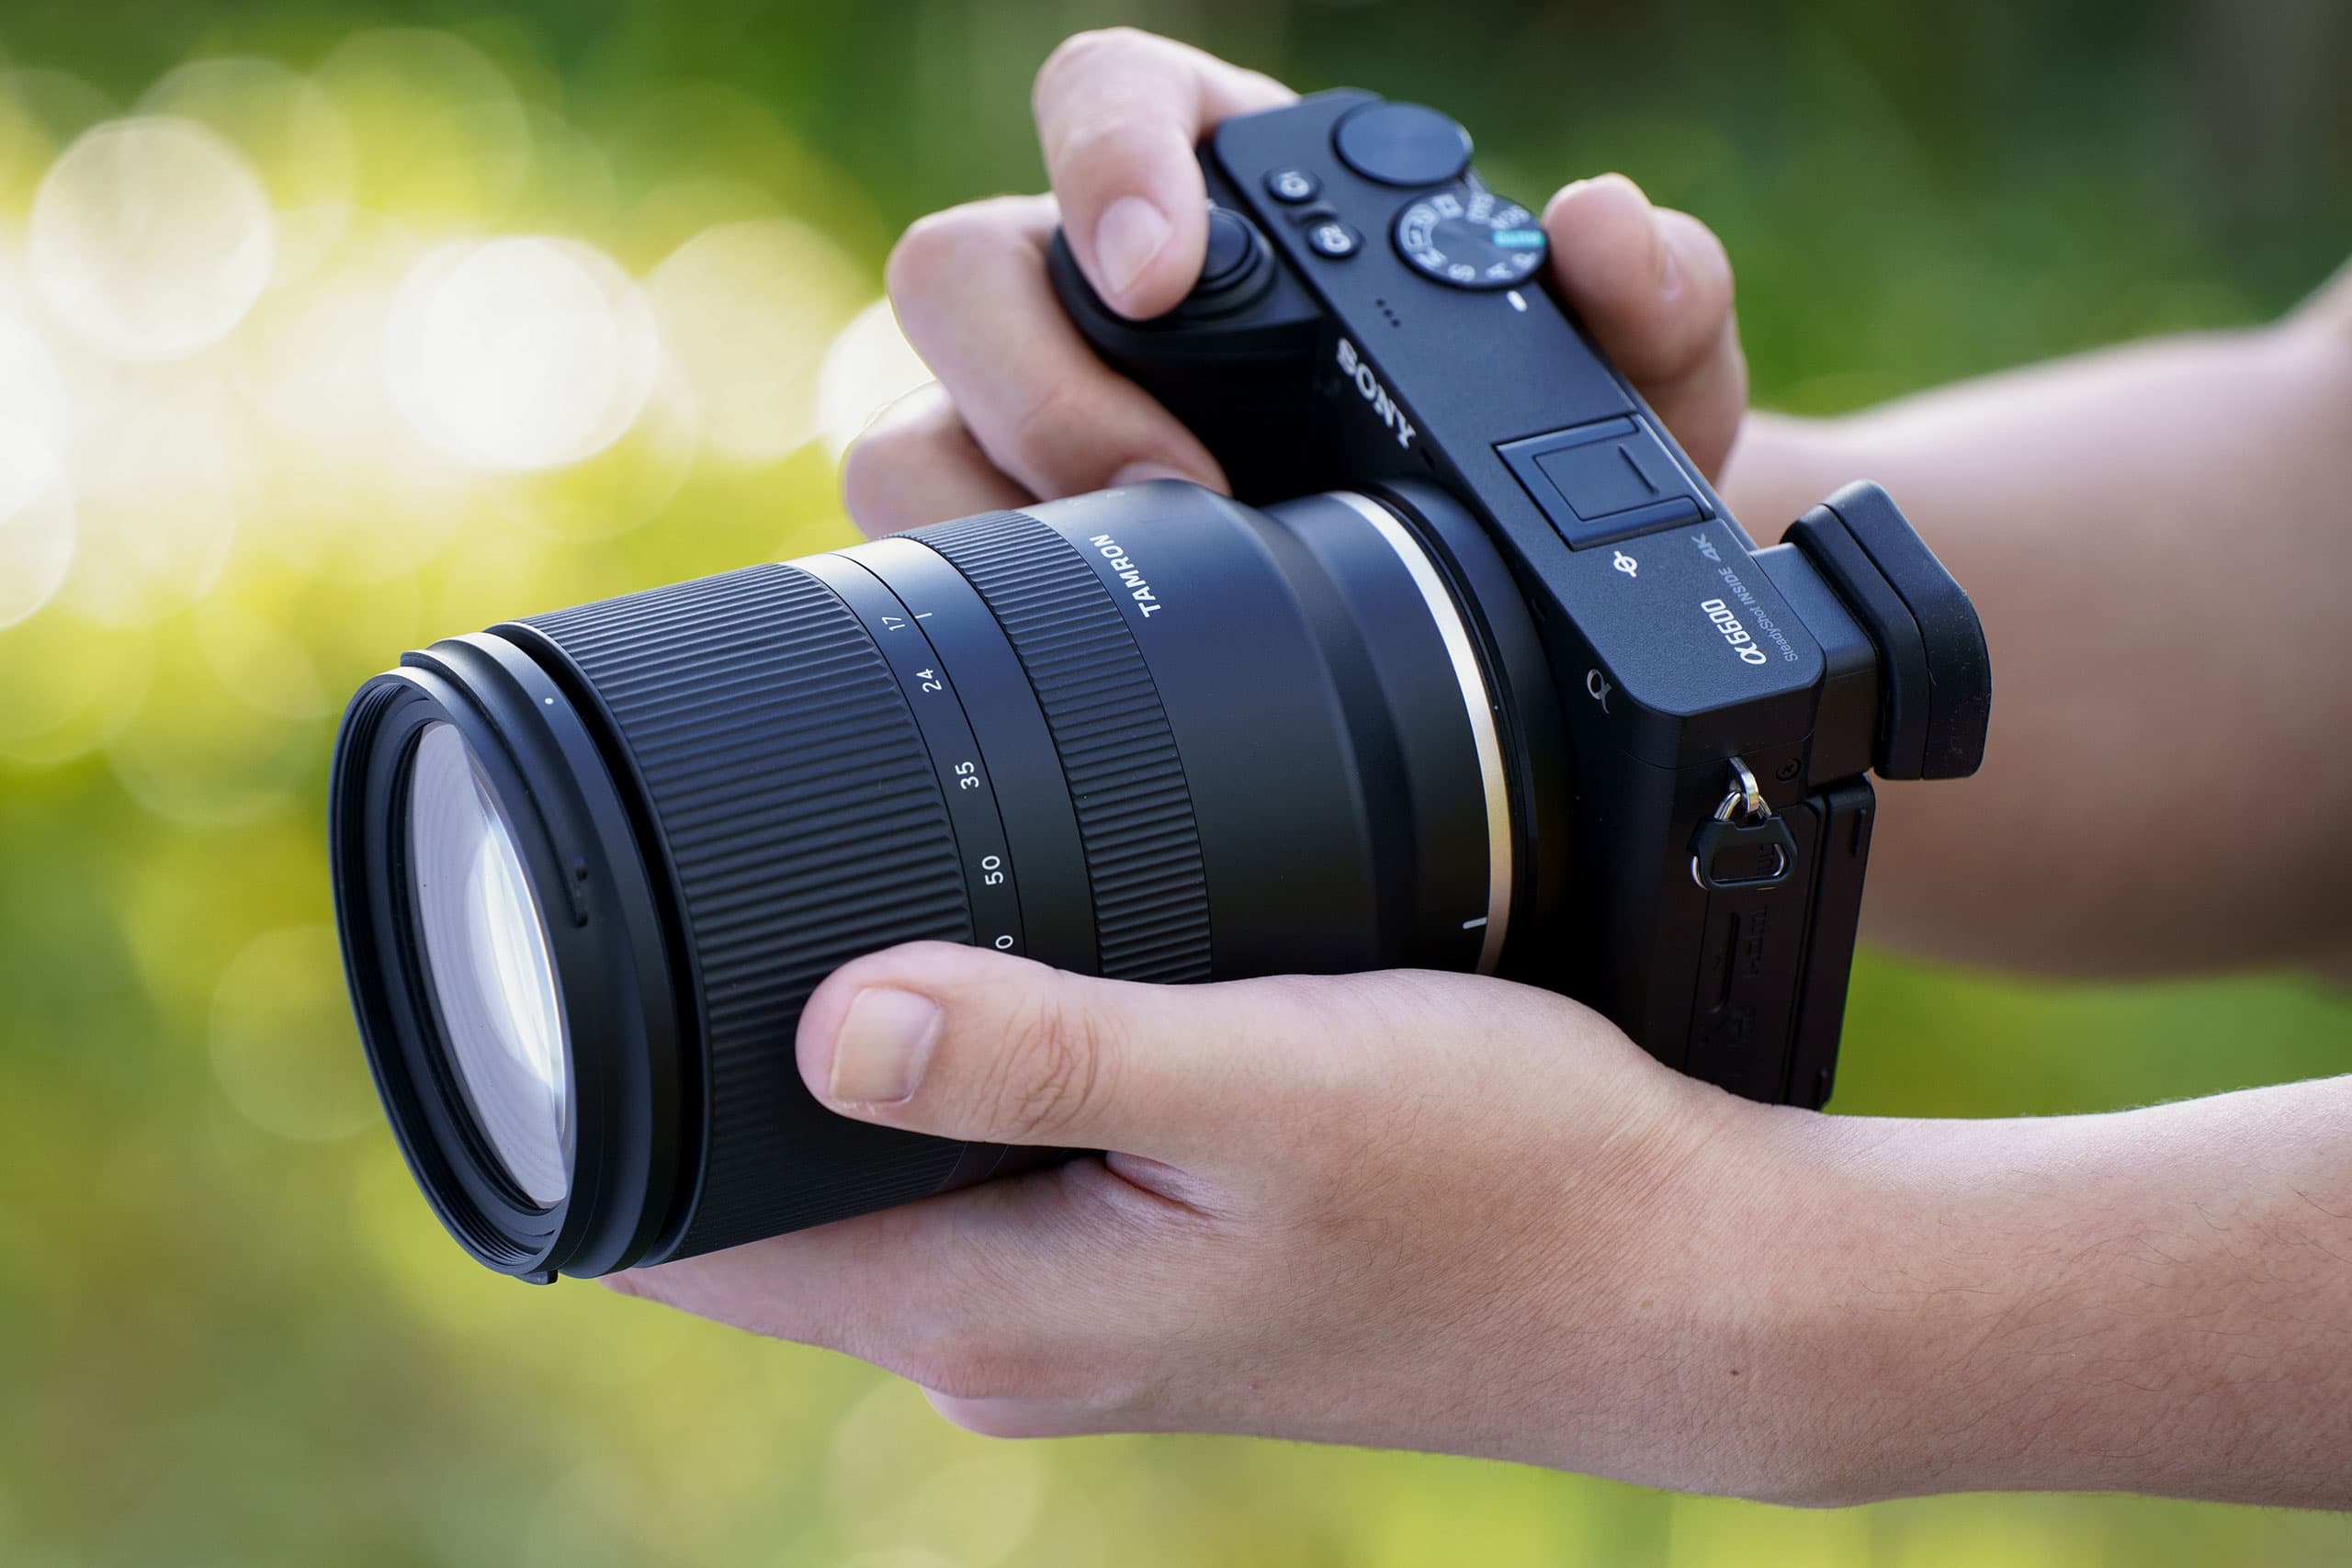 Announced: Tamron 17-70mm f/2.8 Di III-A VC RX D APS-C zoom lens